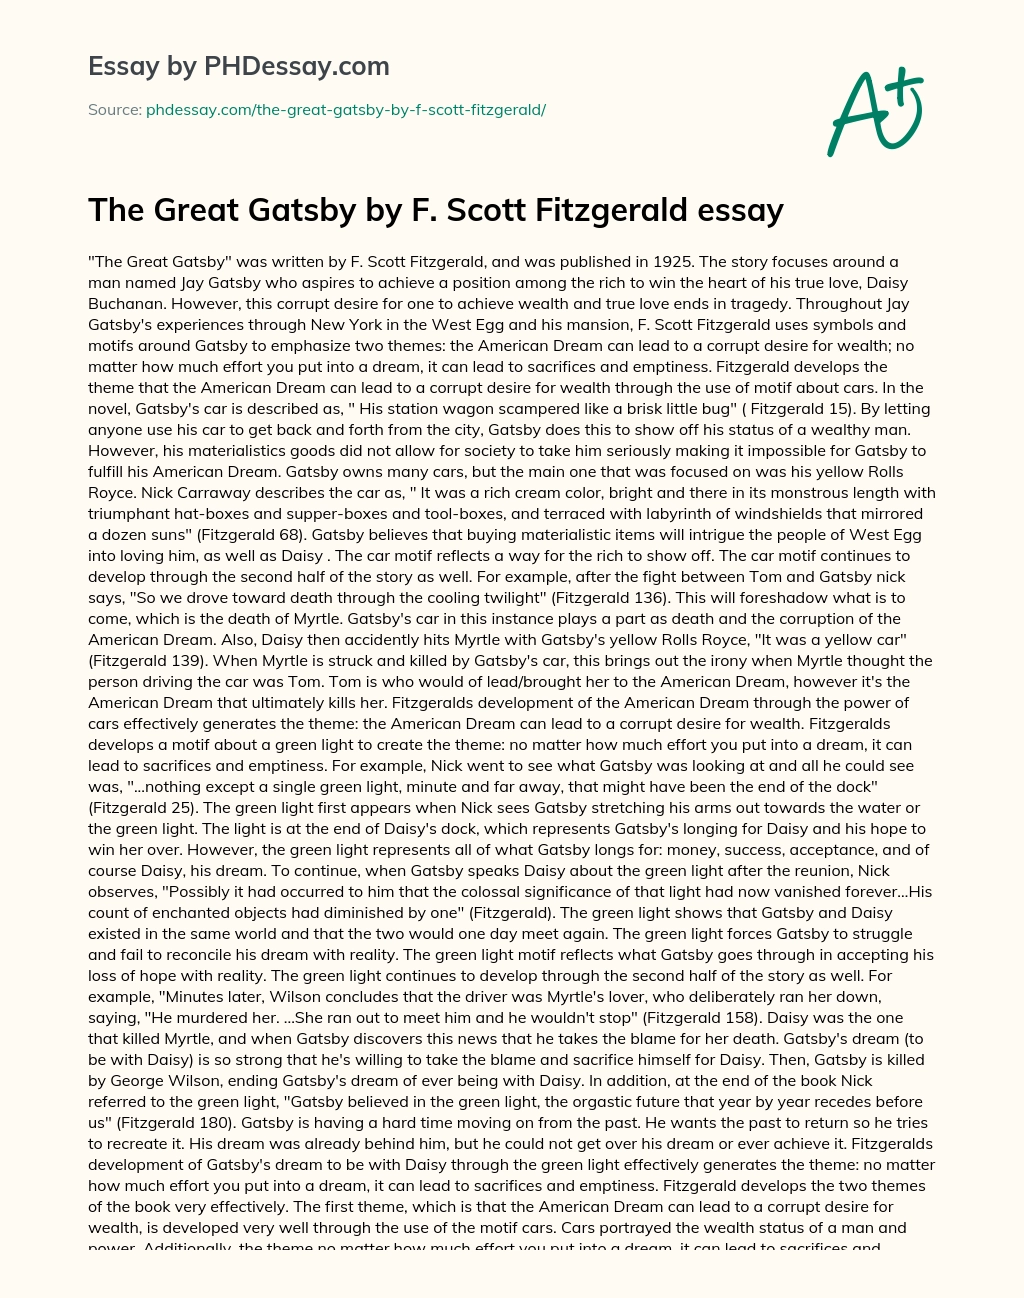 The Great Gatsby by F. Scott Fitzgerald essay essay